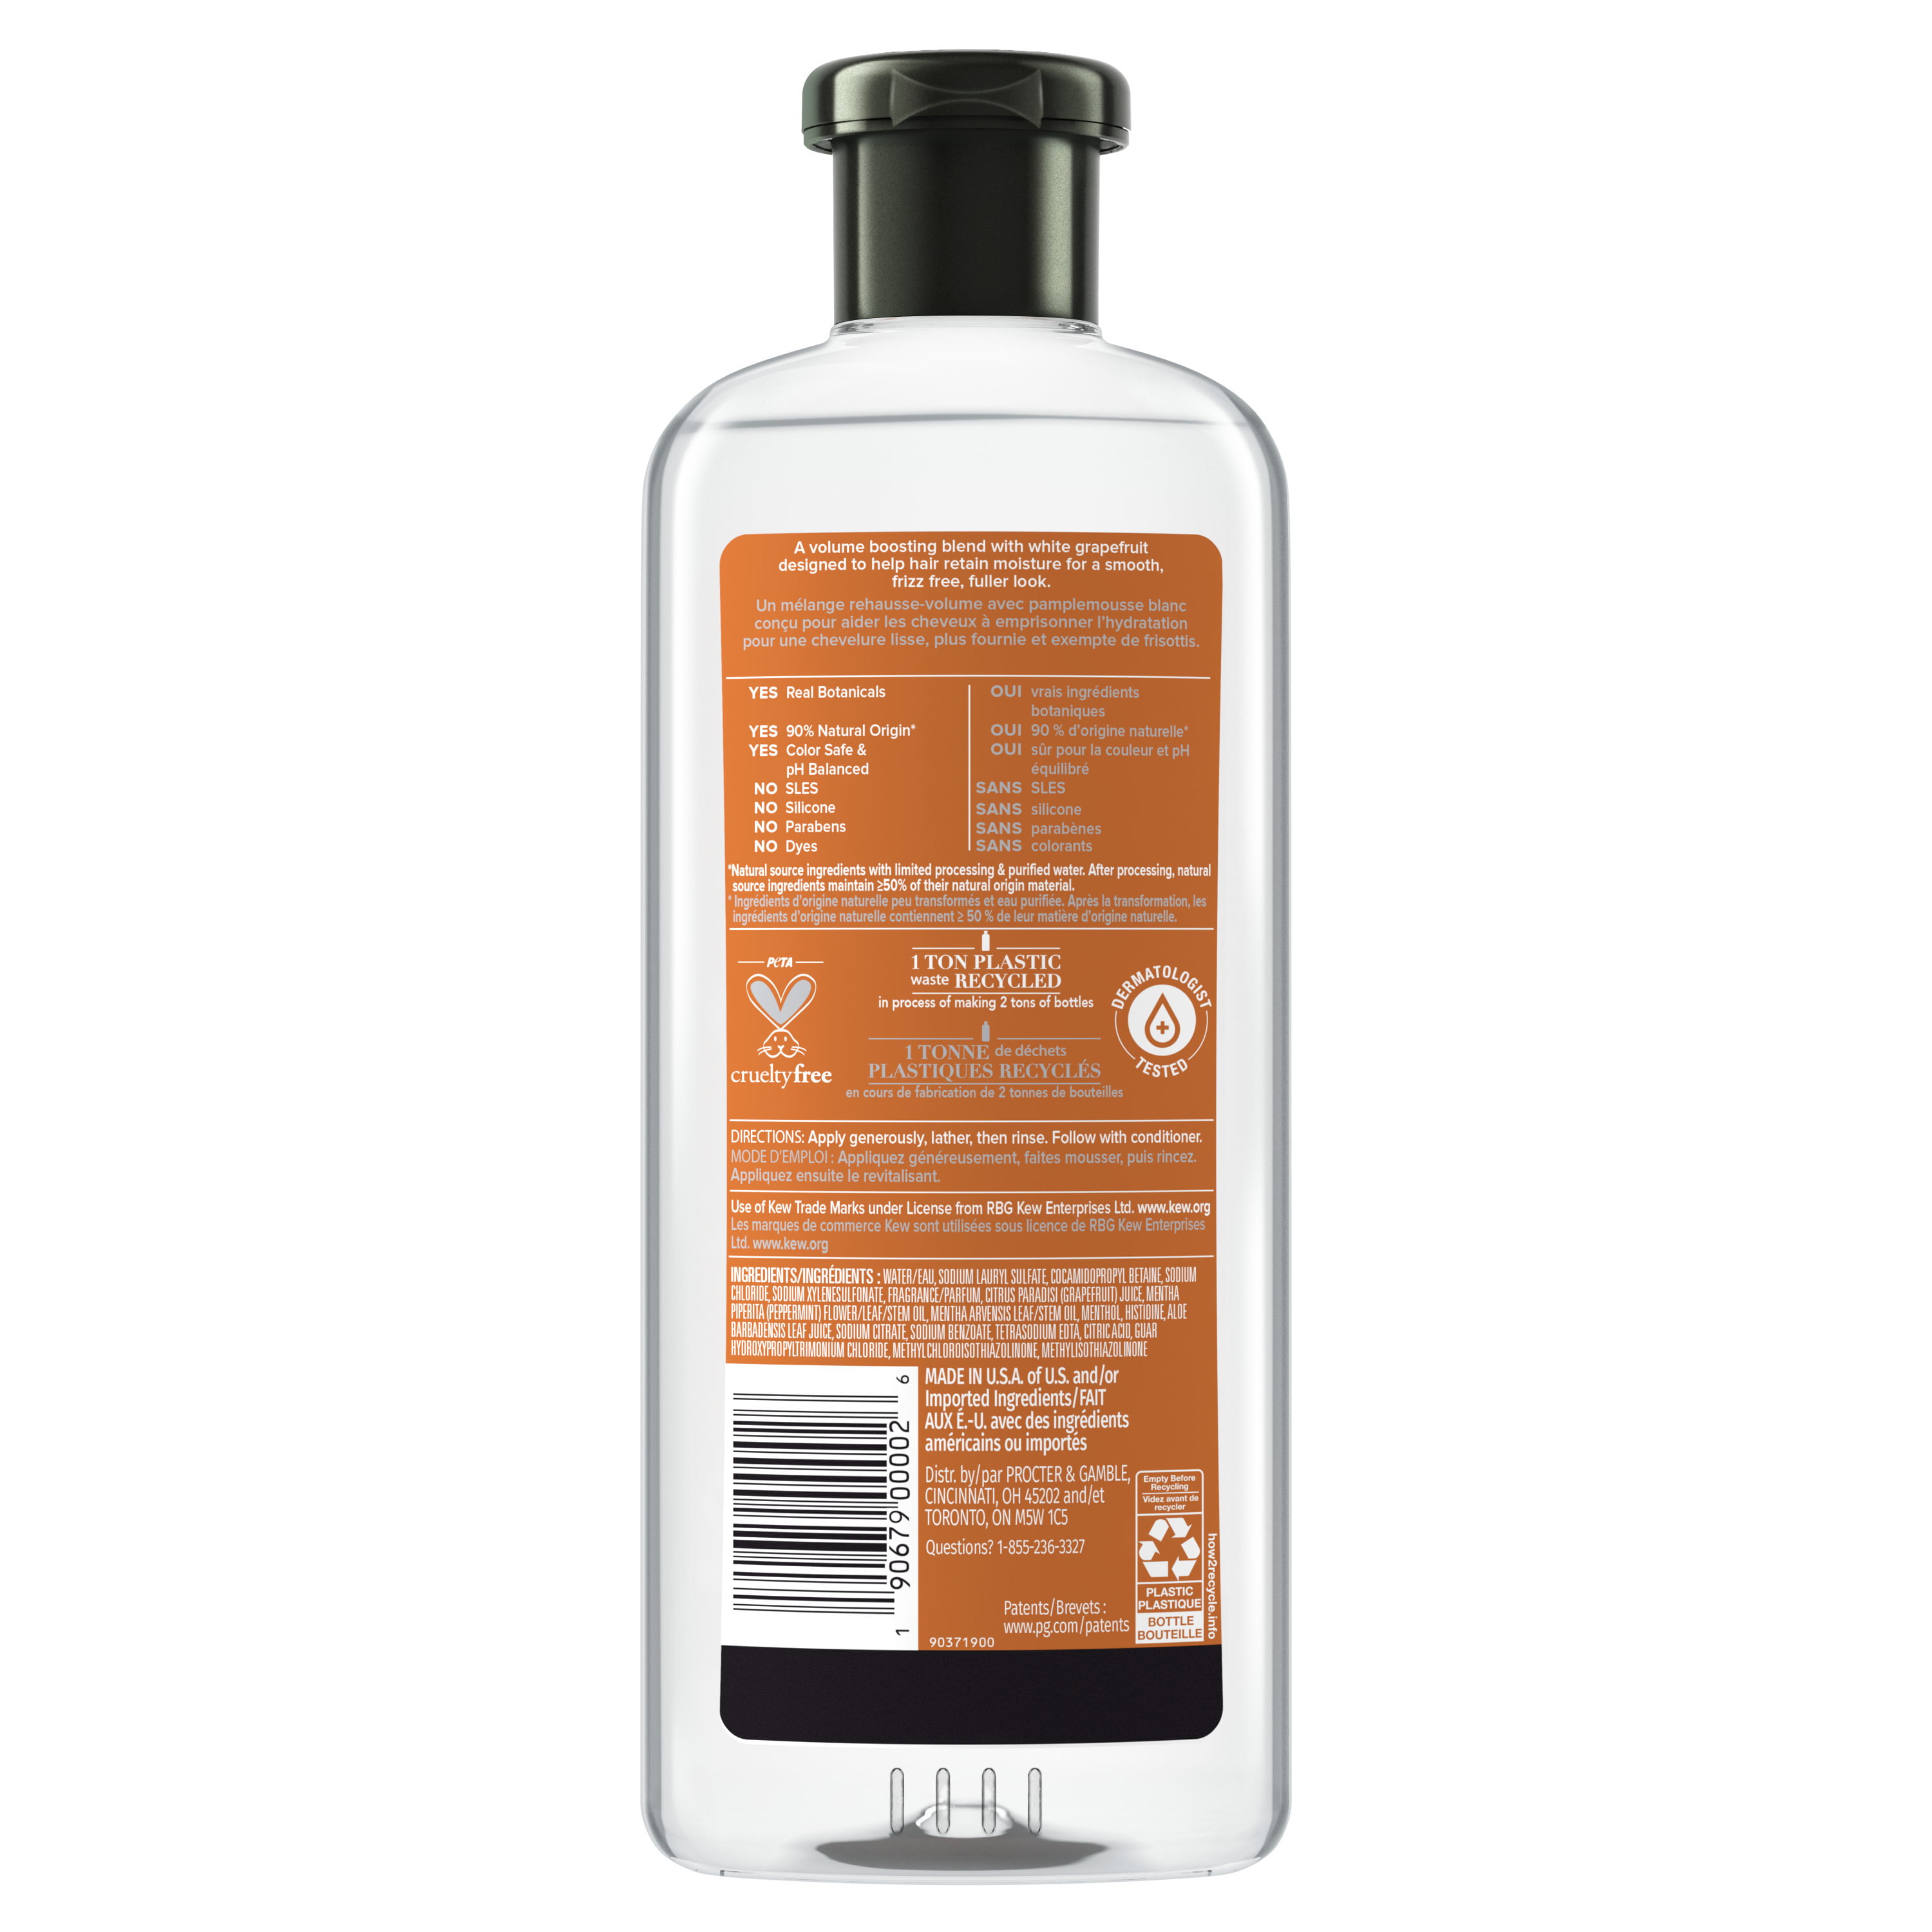 Herbal Essences bio:renew White Mint Naked Volume Shampoo, 13.5 fl - Walmart.com